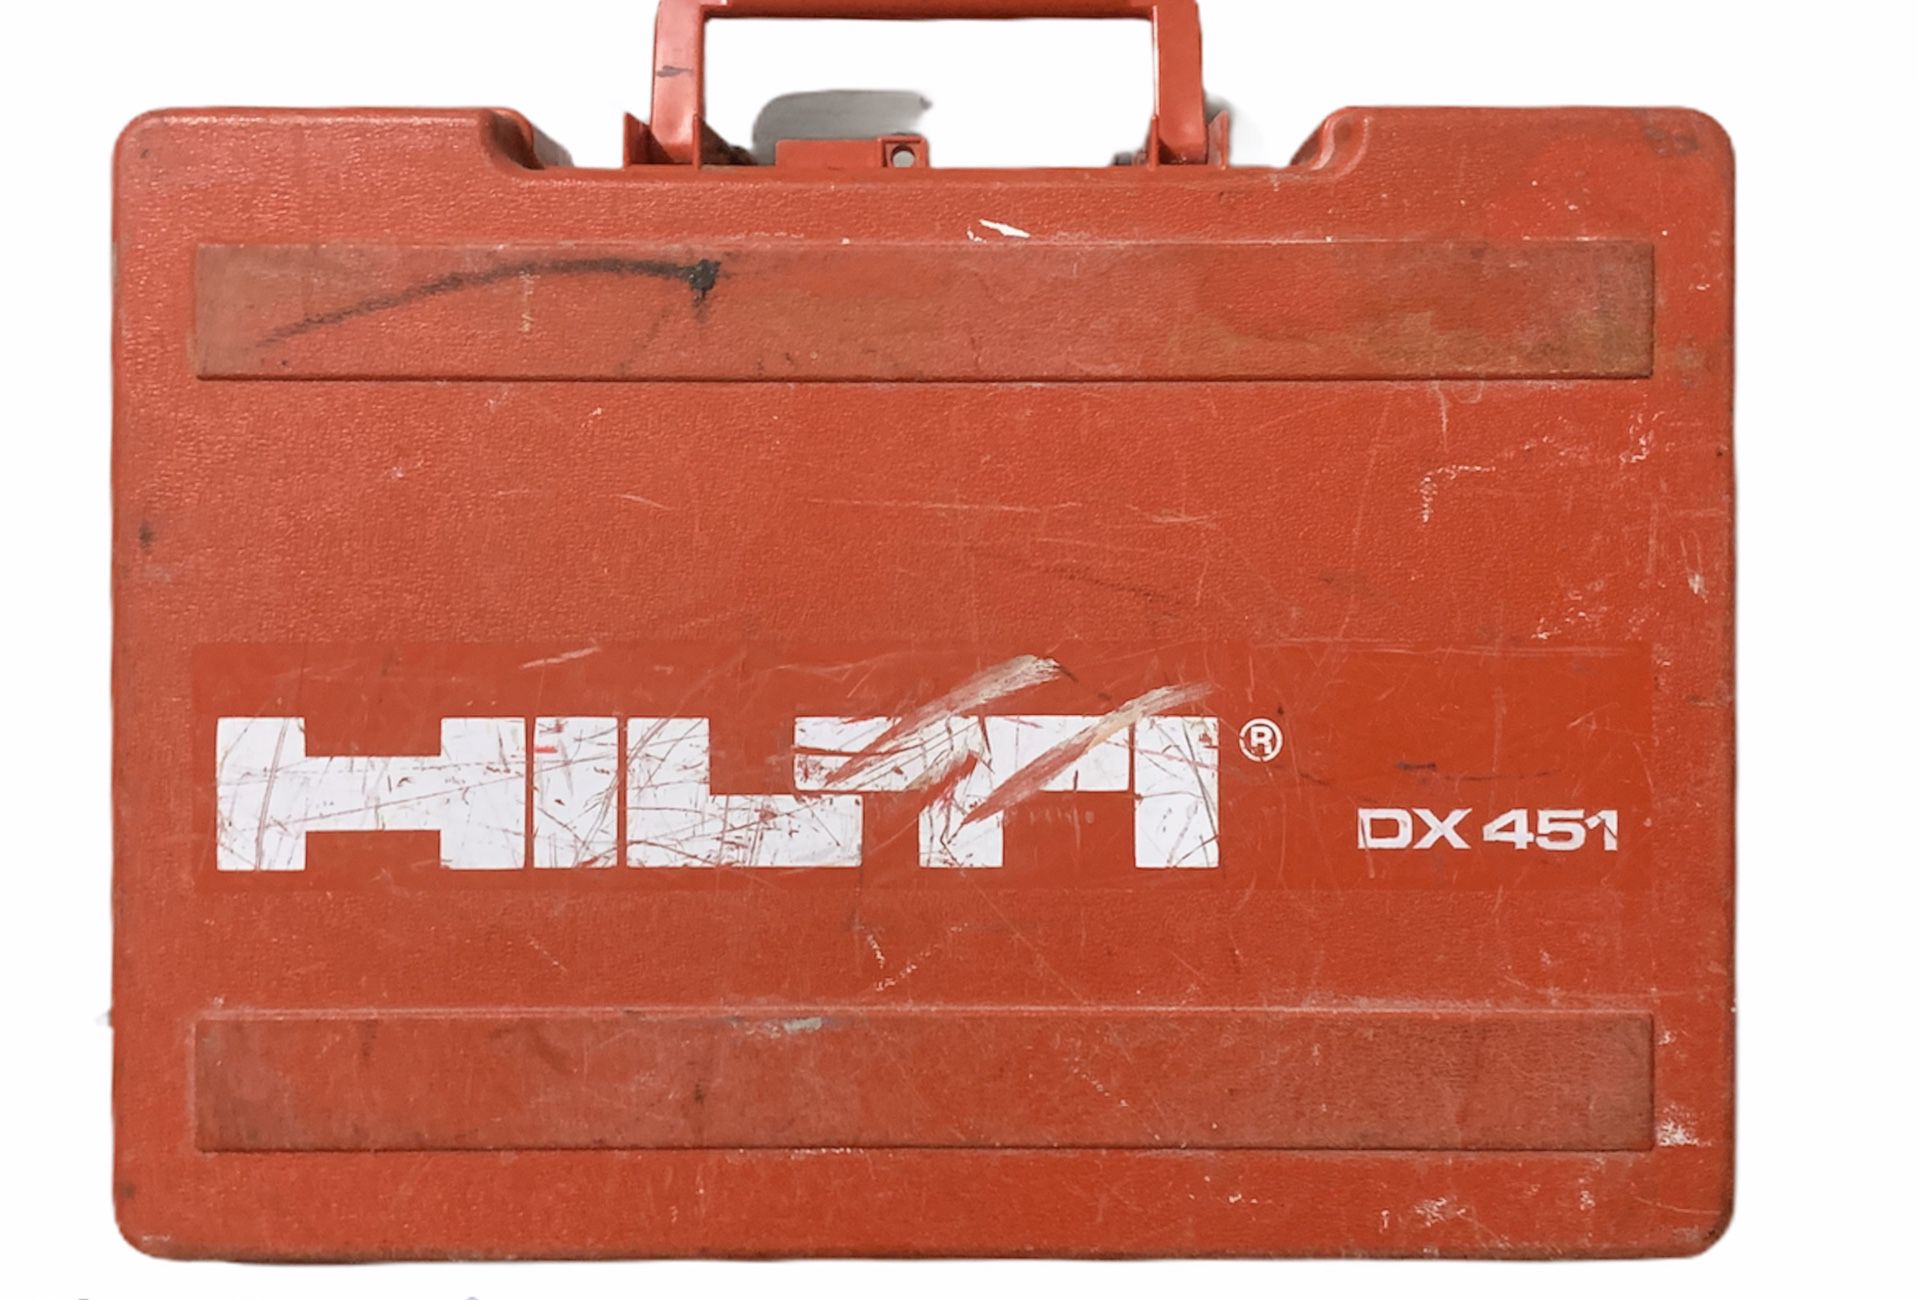 USED HILTI DX451 POWDER ACTUATED FASTENING NAIL GUN TOOL + CASE * DX 451